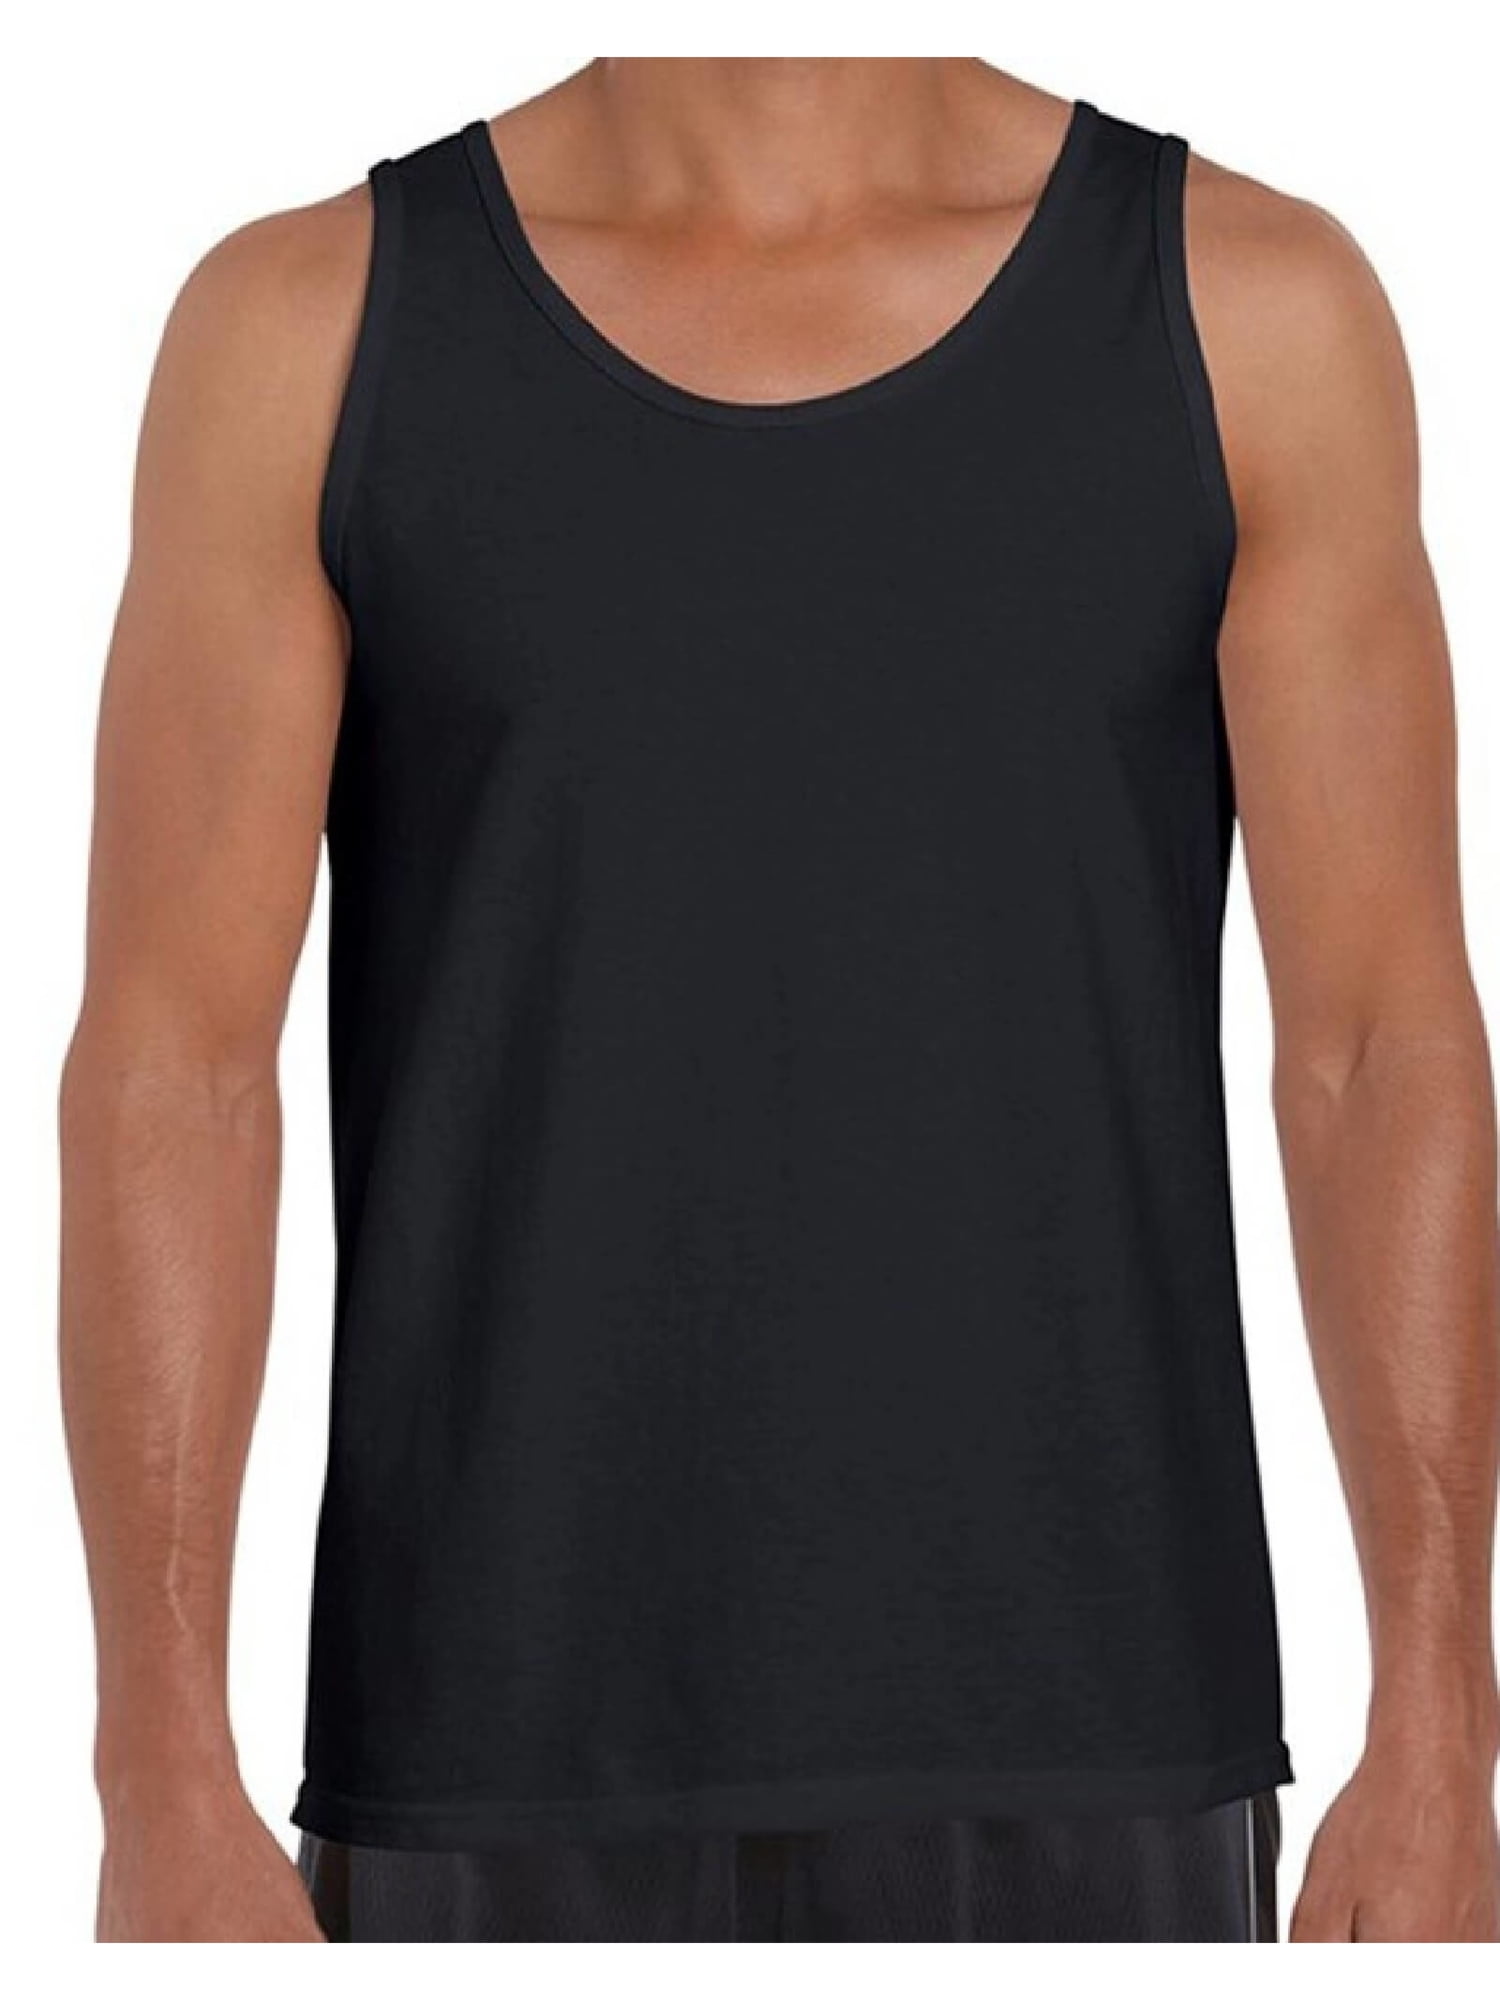 Gildan Tank Top for Men Cotton Sleeveless Shirts for Him Mens Muscle Shirts Best Mens Tanks Blank All Color Black Shirts for Men Black Tanks Top - Walmart.com